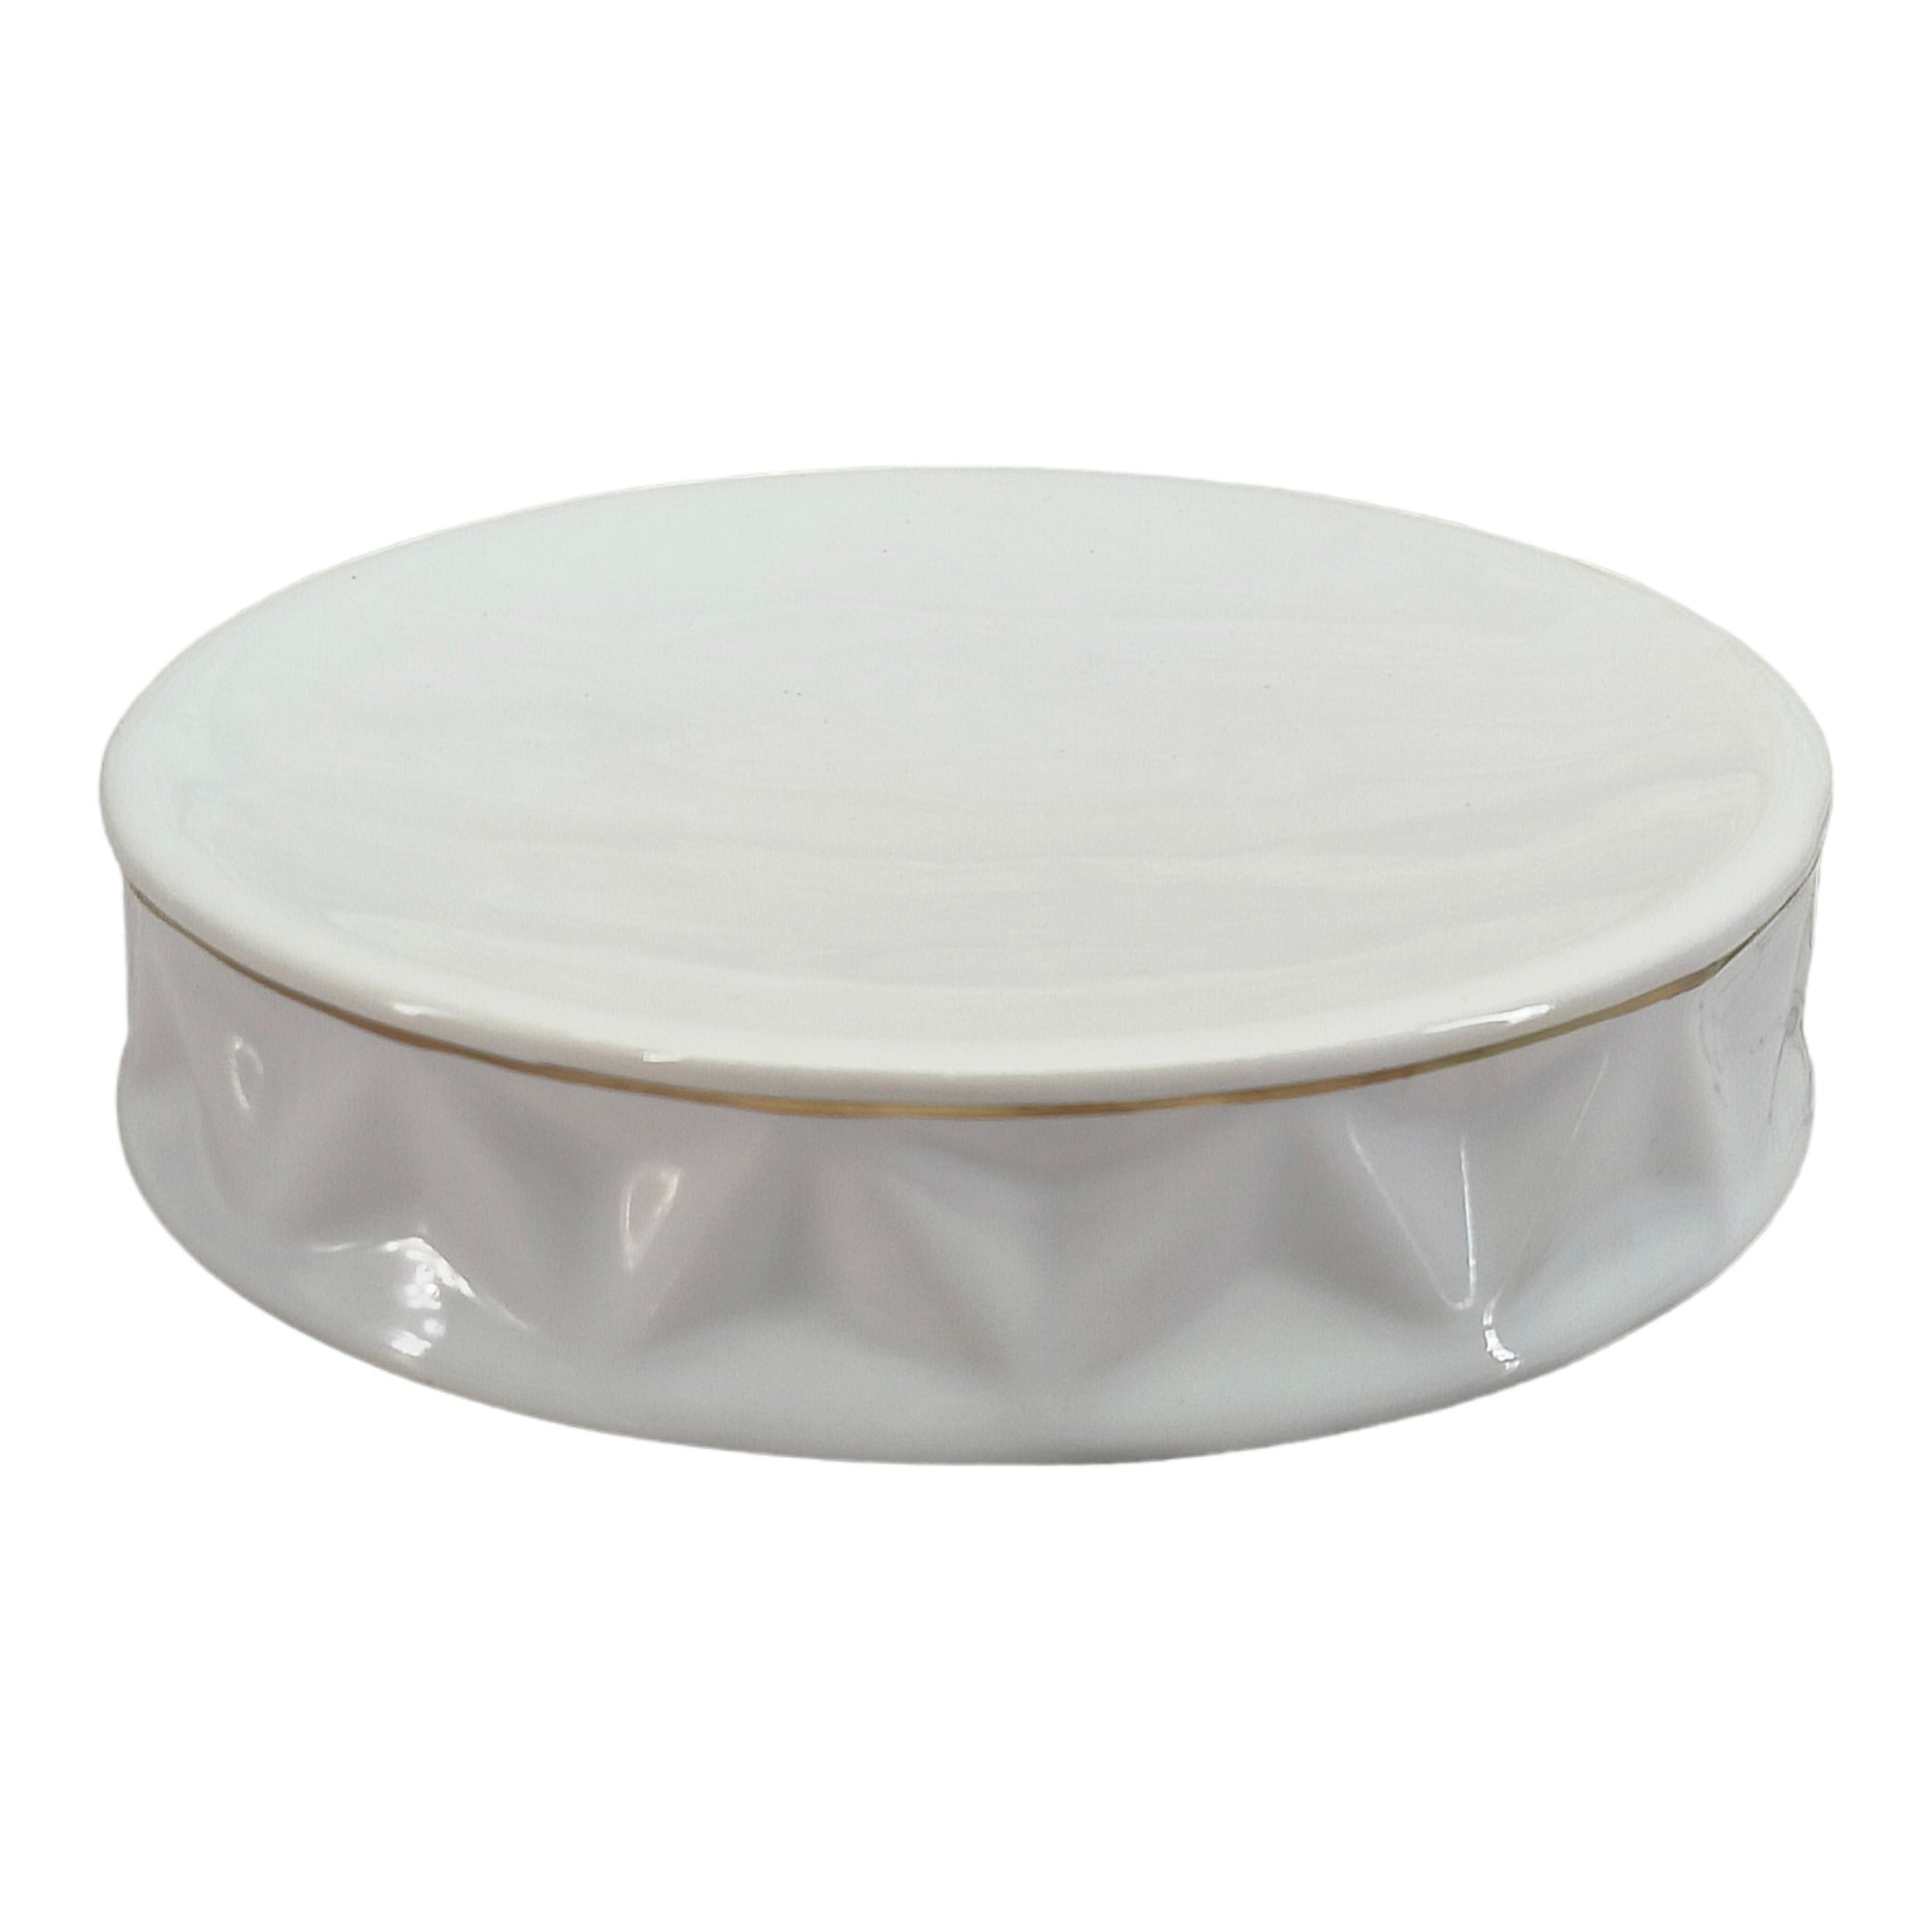 Ceramic Soap Dish Set of 1 Bathroom Accessories for Home (C1100)